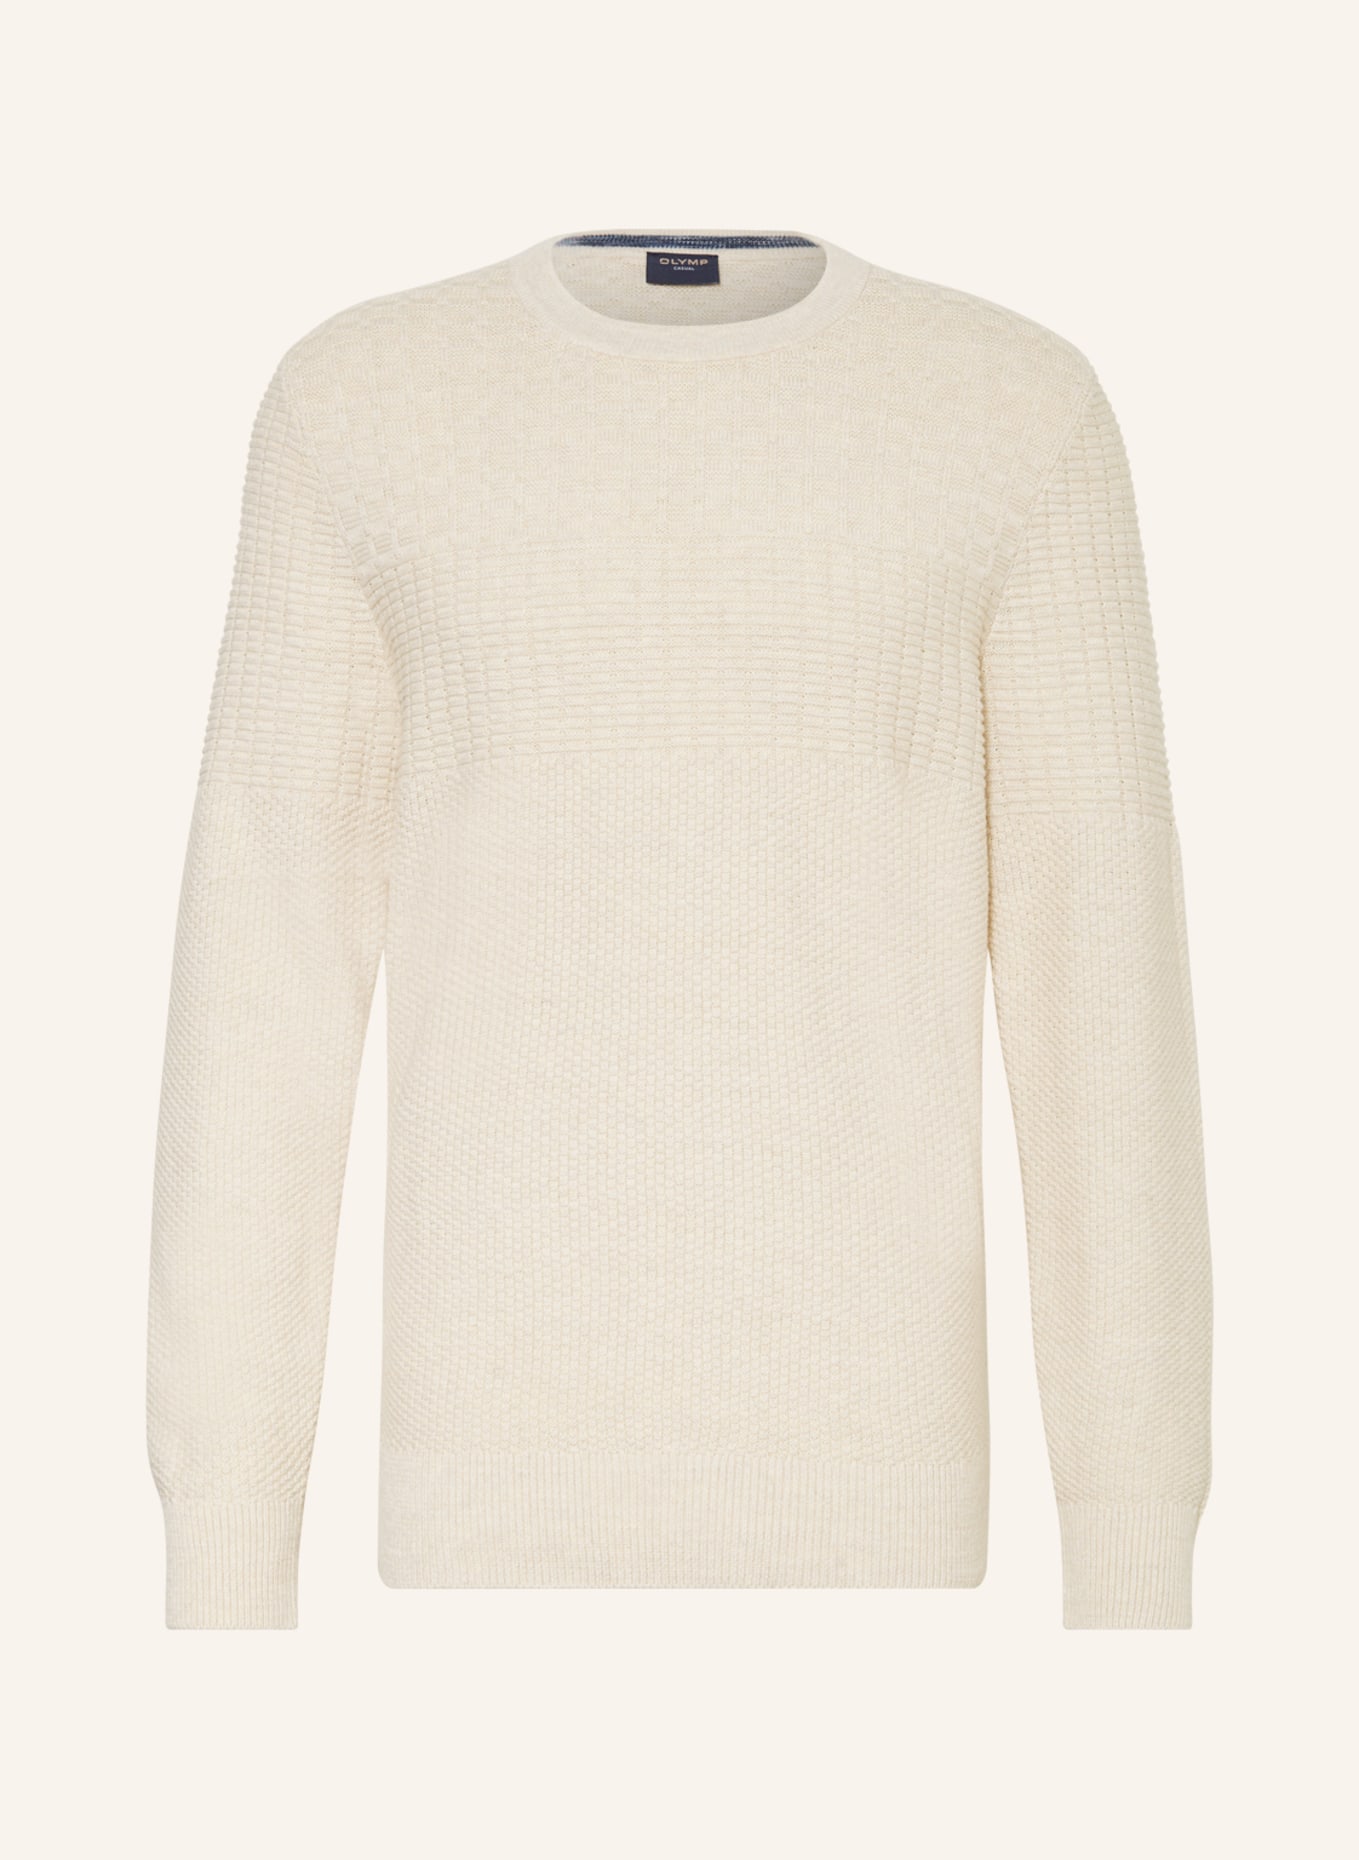 OLYMP Pullover, Farbe: CREME (Bild 1)